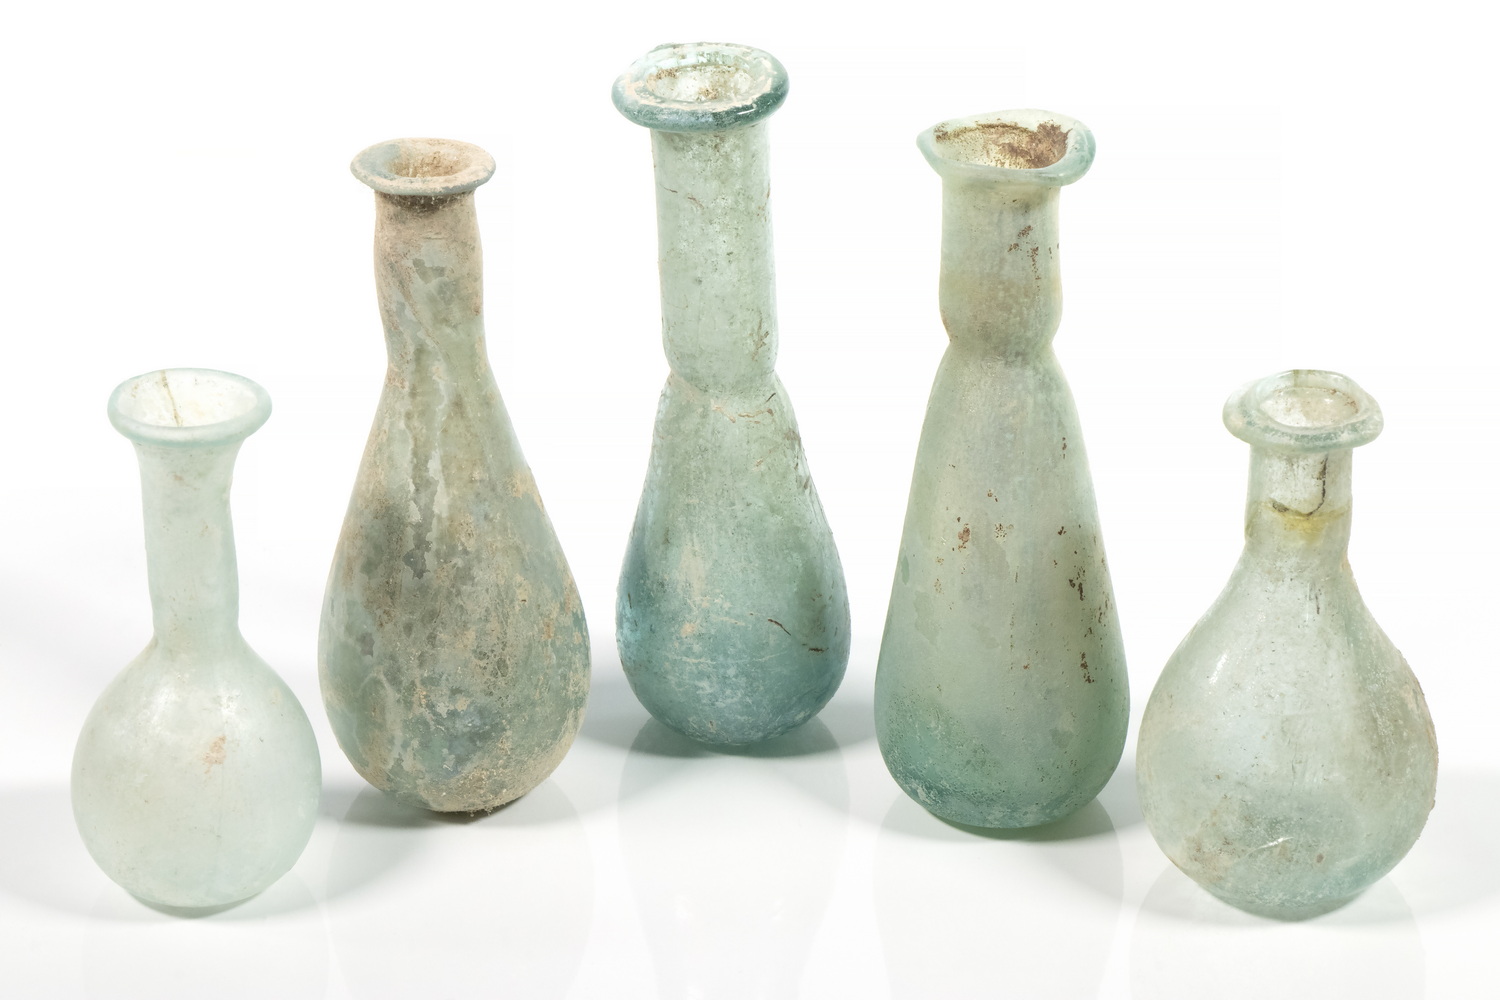  5 ANCIENT ROMAN GLASS BOTTLES 2b2d70